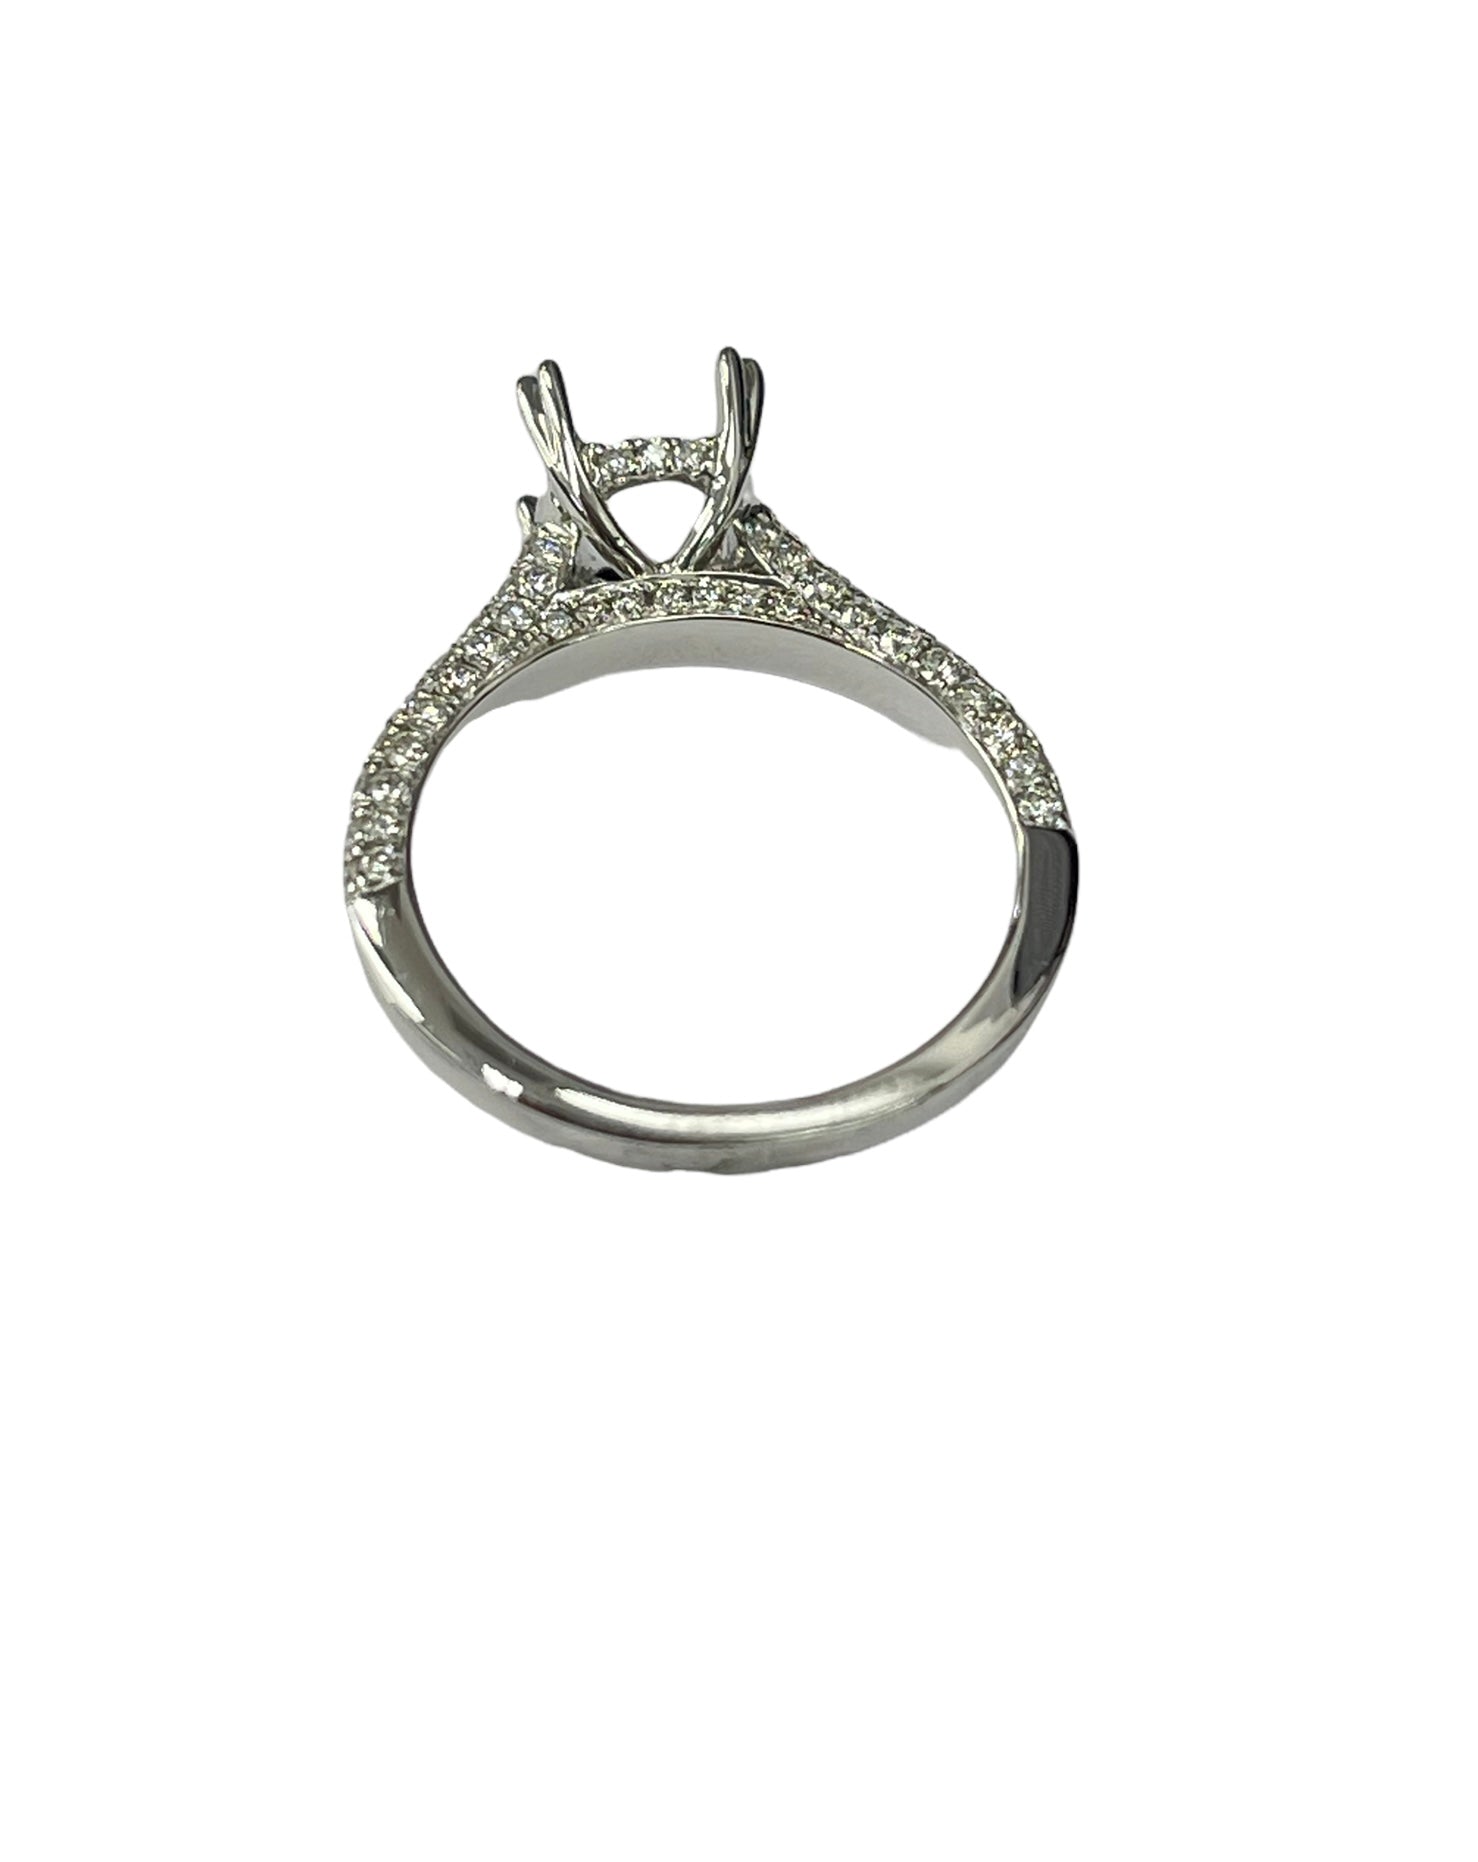 4 Prong Semi-Mounting Engagement Diamond Ring White Gold 18kt